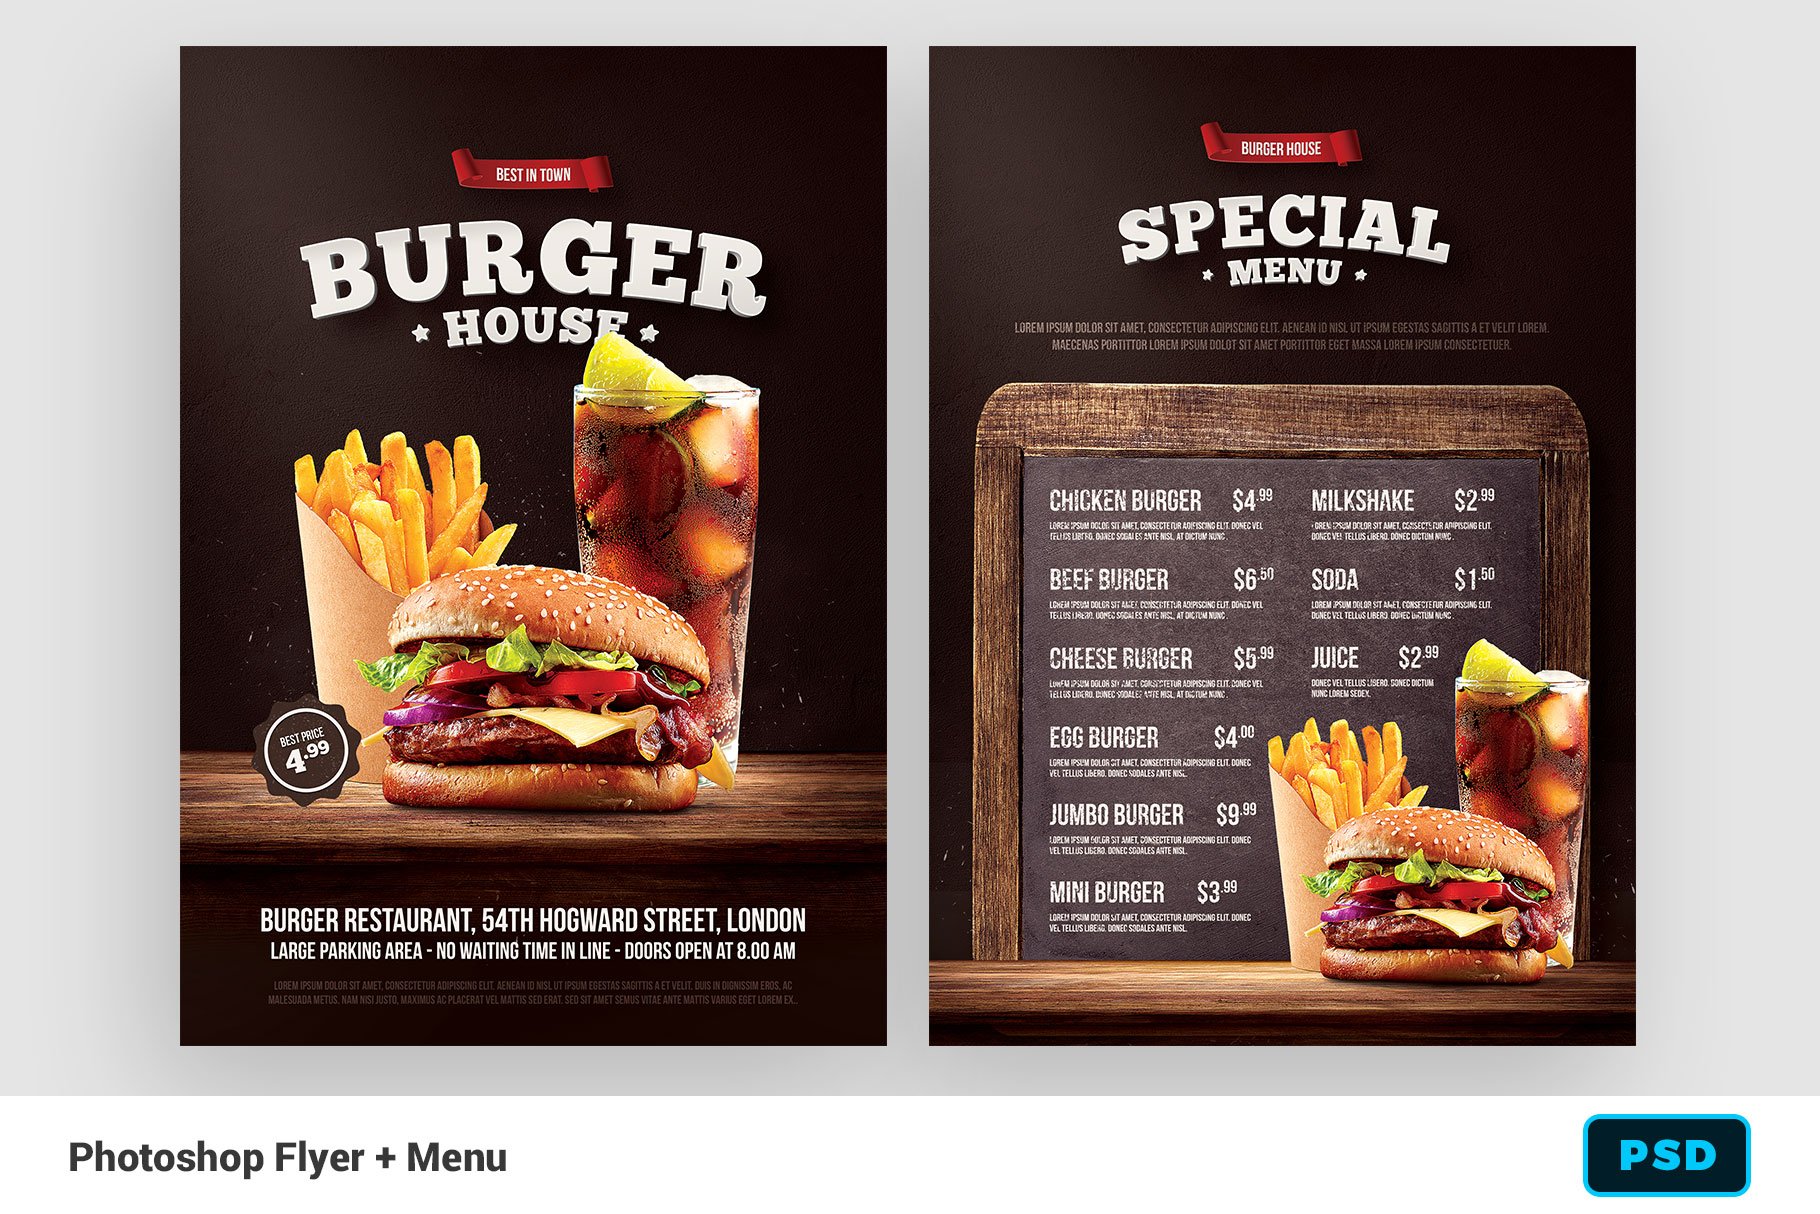 Burger Flyer + Menu cover image.